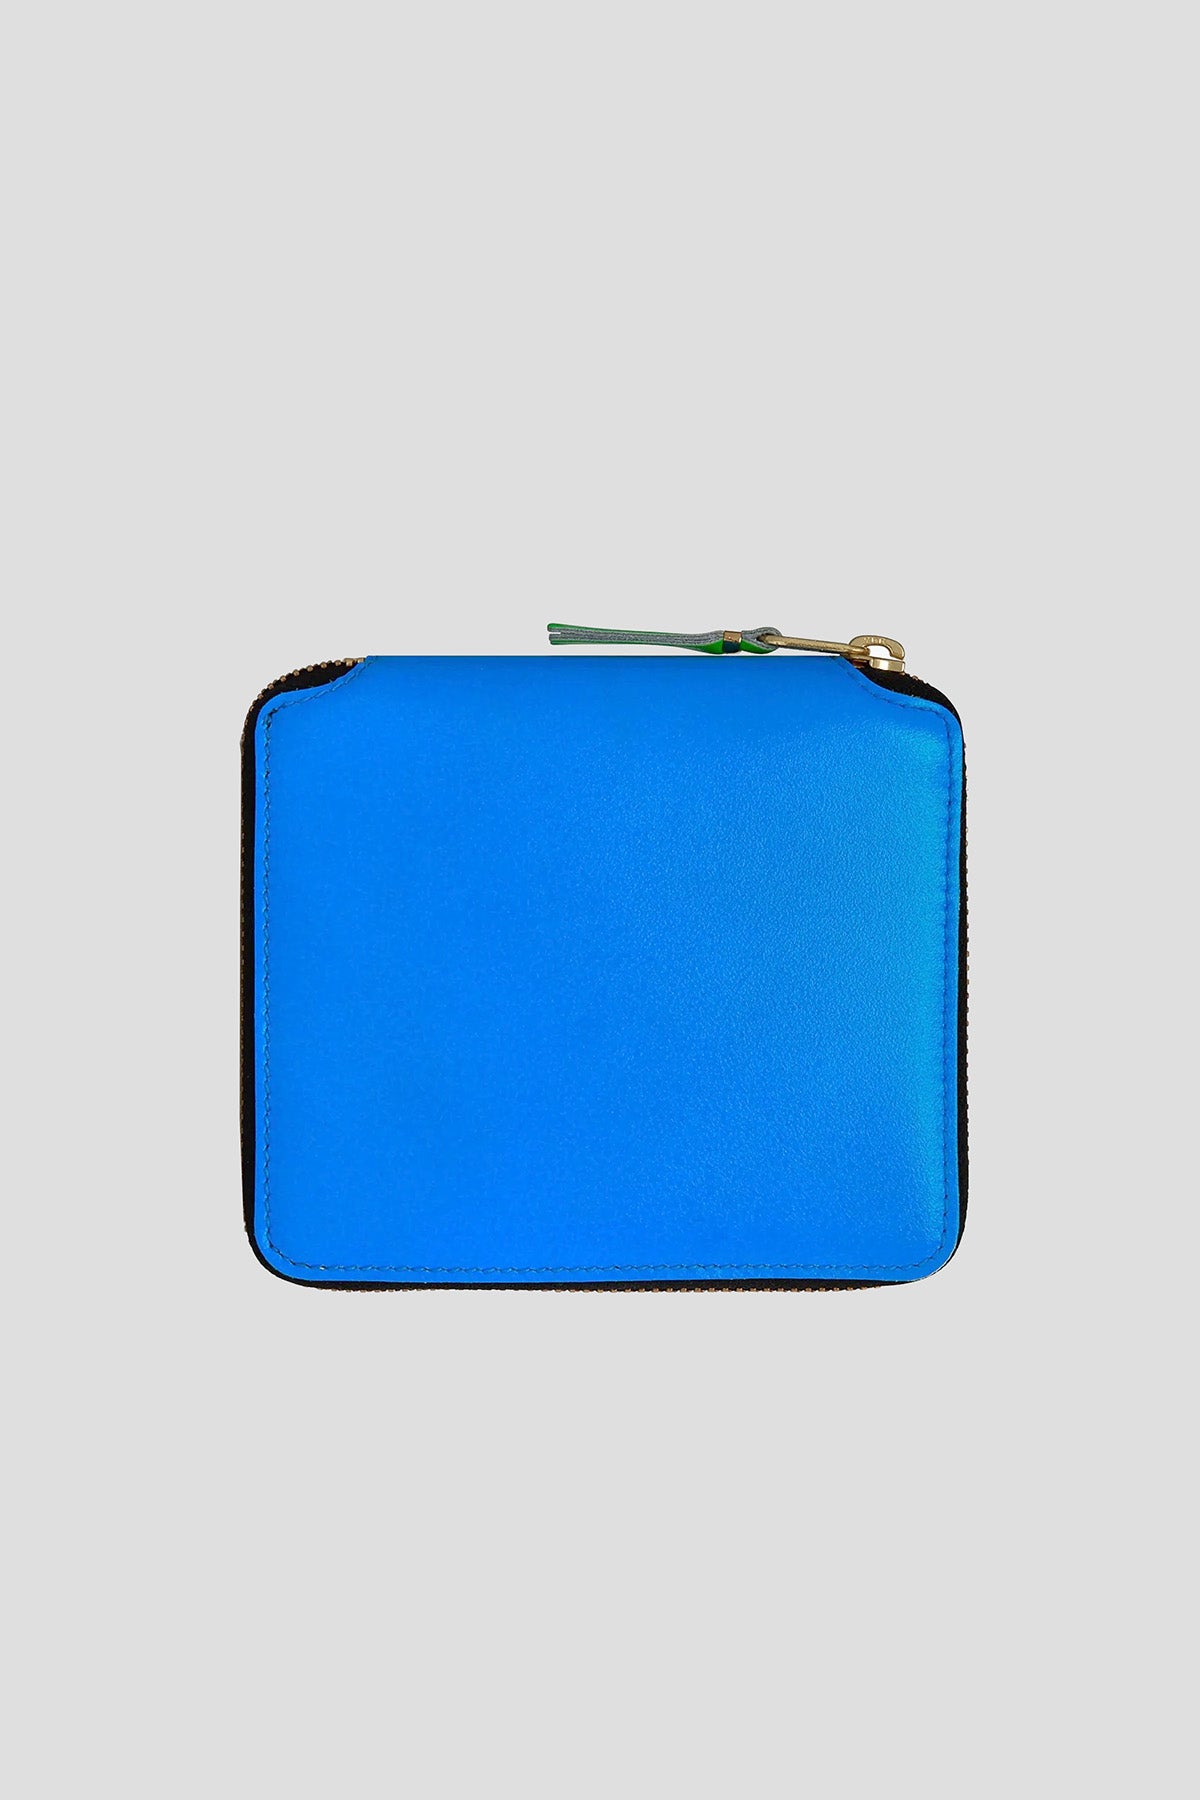 Comme des Garcons SA8100SF Super Fluo Wallet Green/Blue